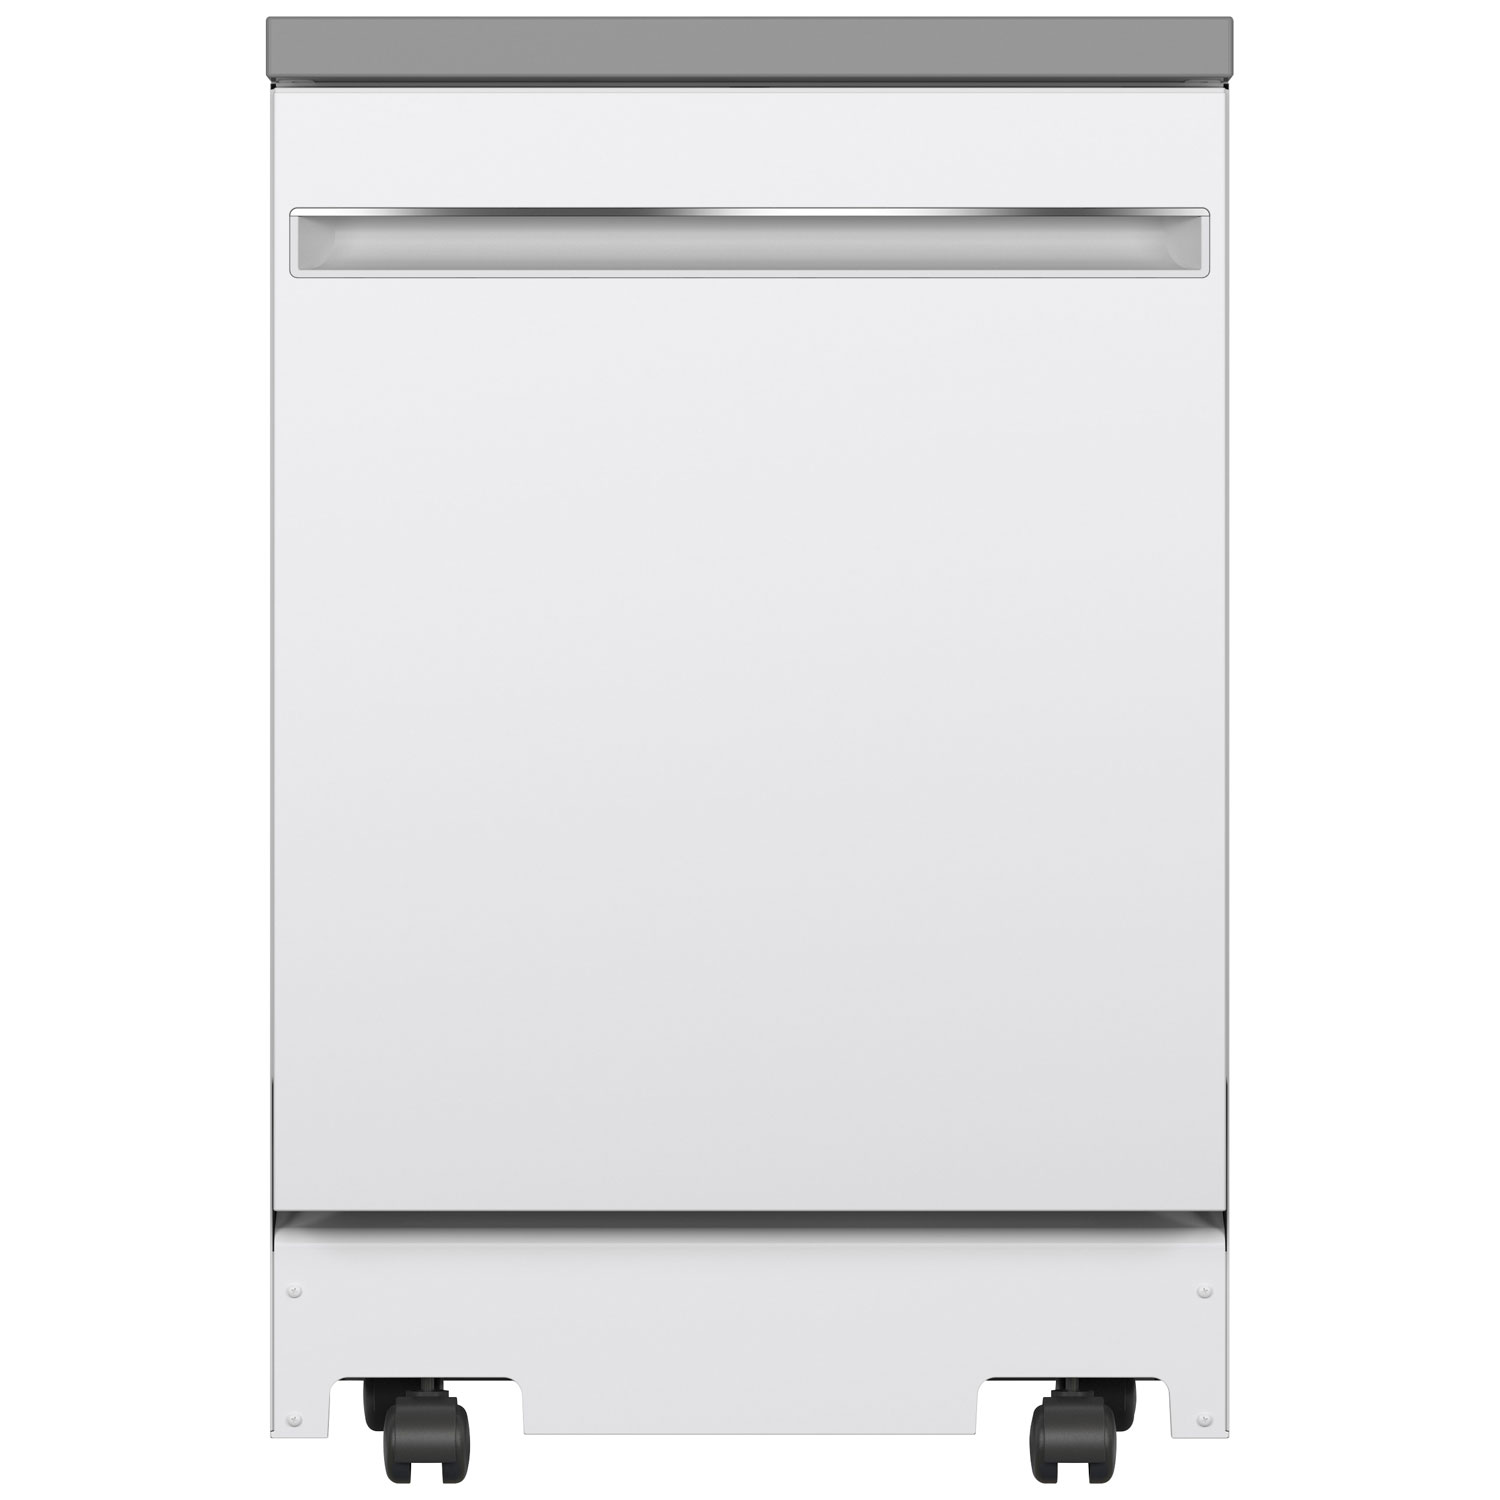 GE 23.62'' 58dB Portable Dishwasher (GPT225SGLWW) - White